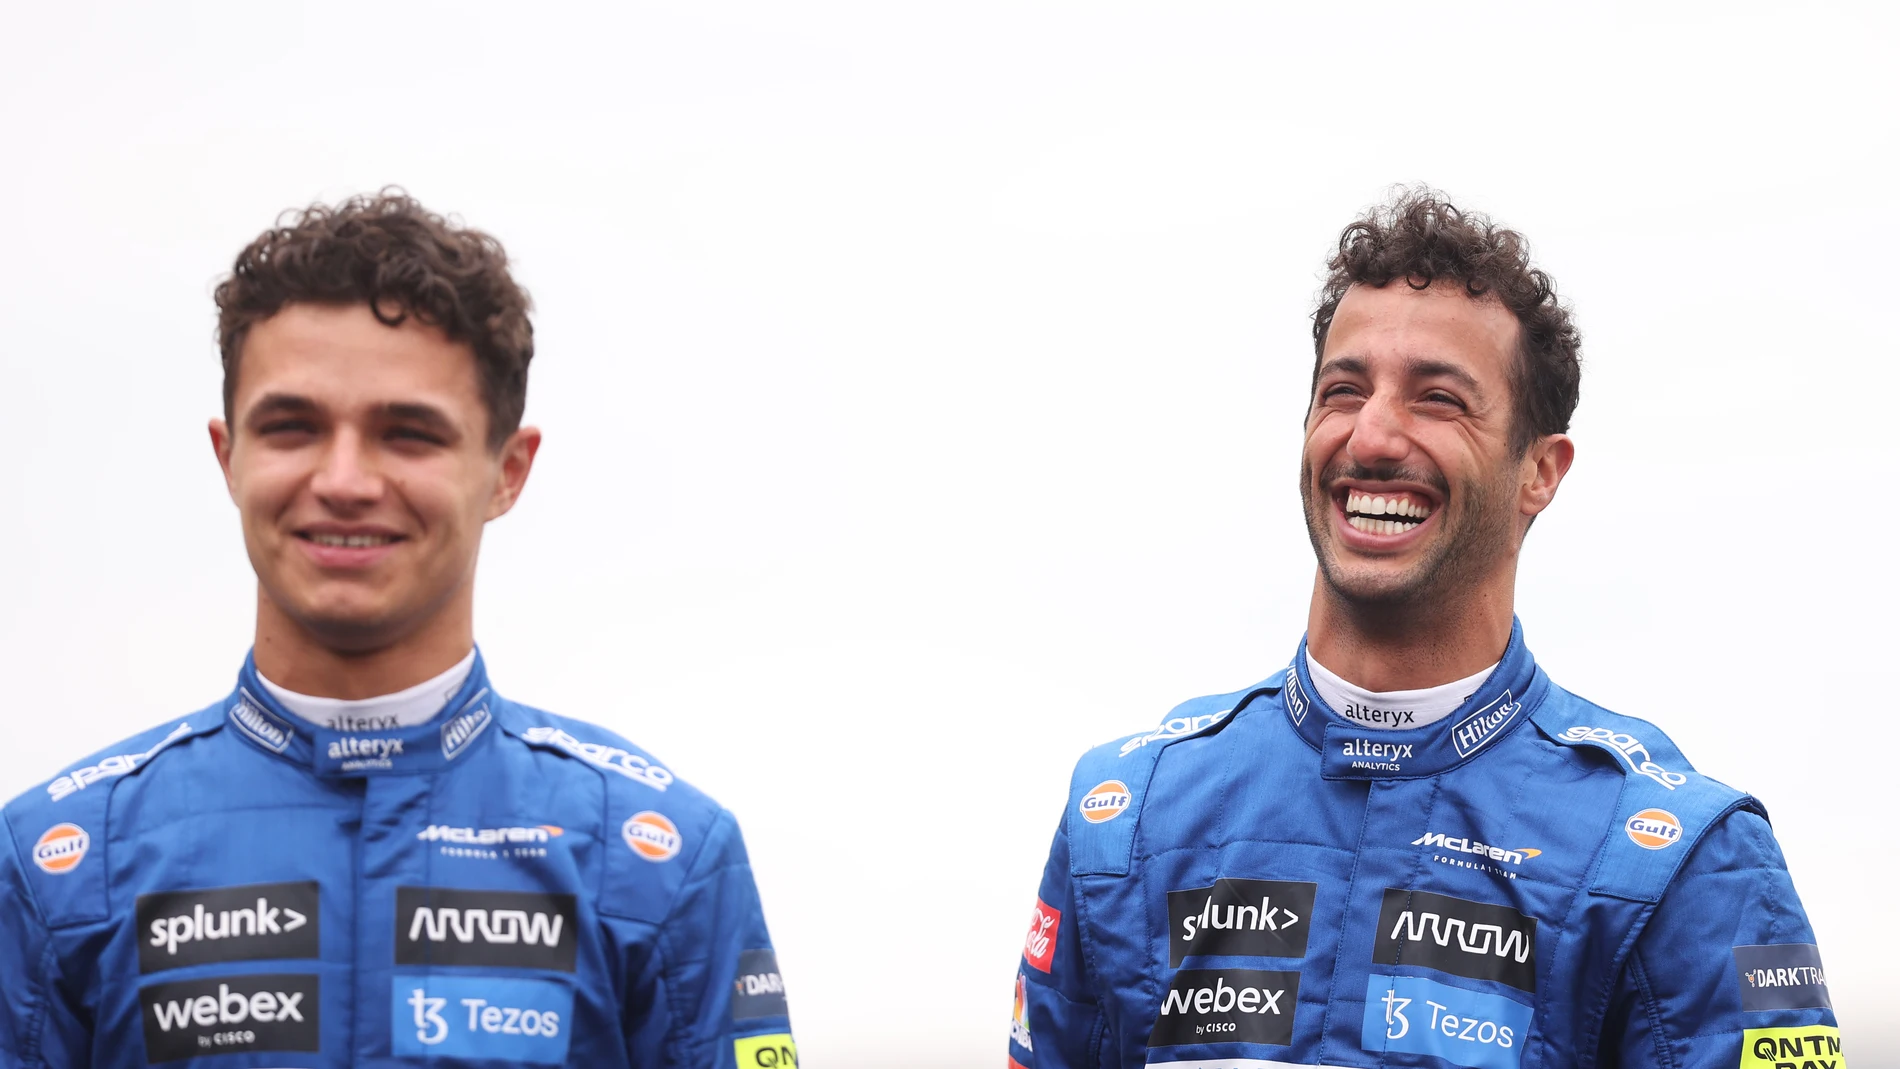 Lando Norris y Daniel Ricciardo